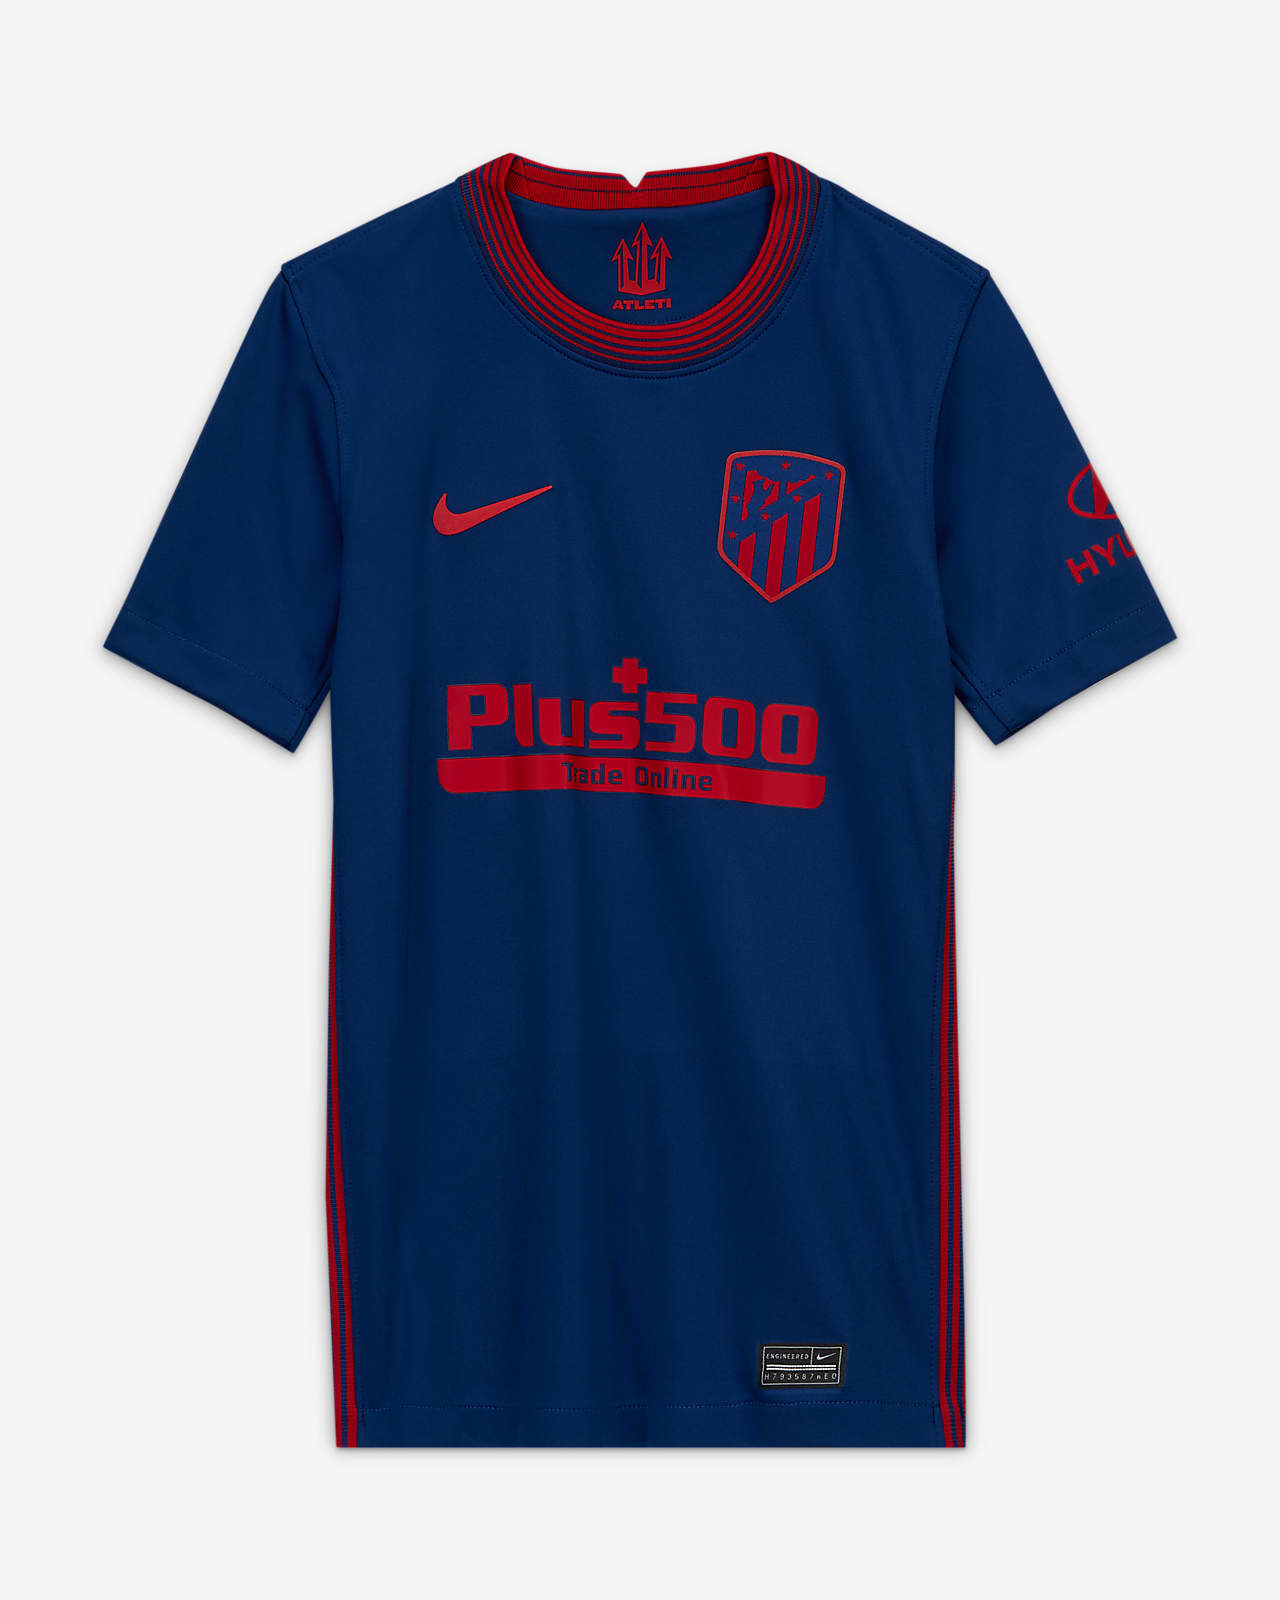 Atletico De Madrid 2020 2021 Stadium Away Older Kids Football Shirt Nike Ae